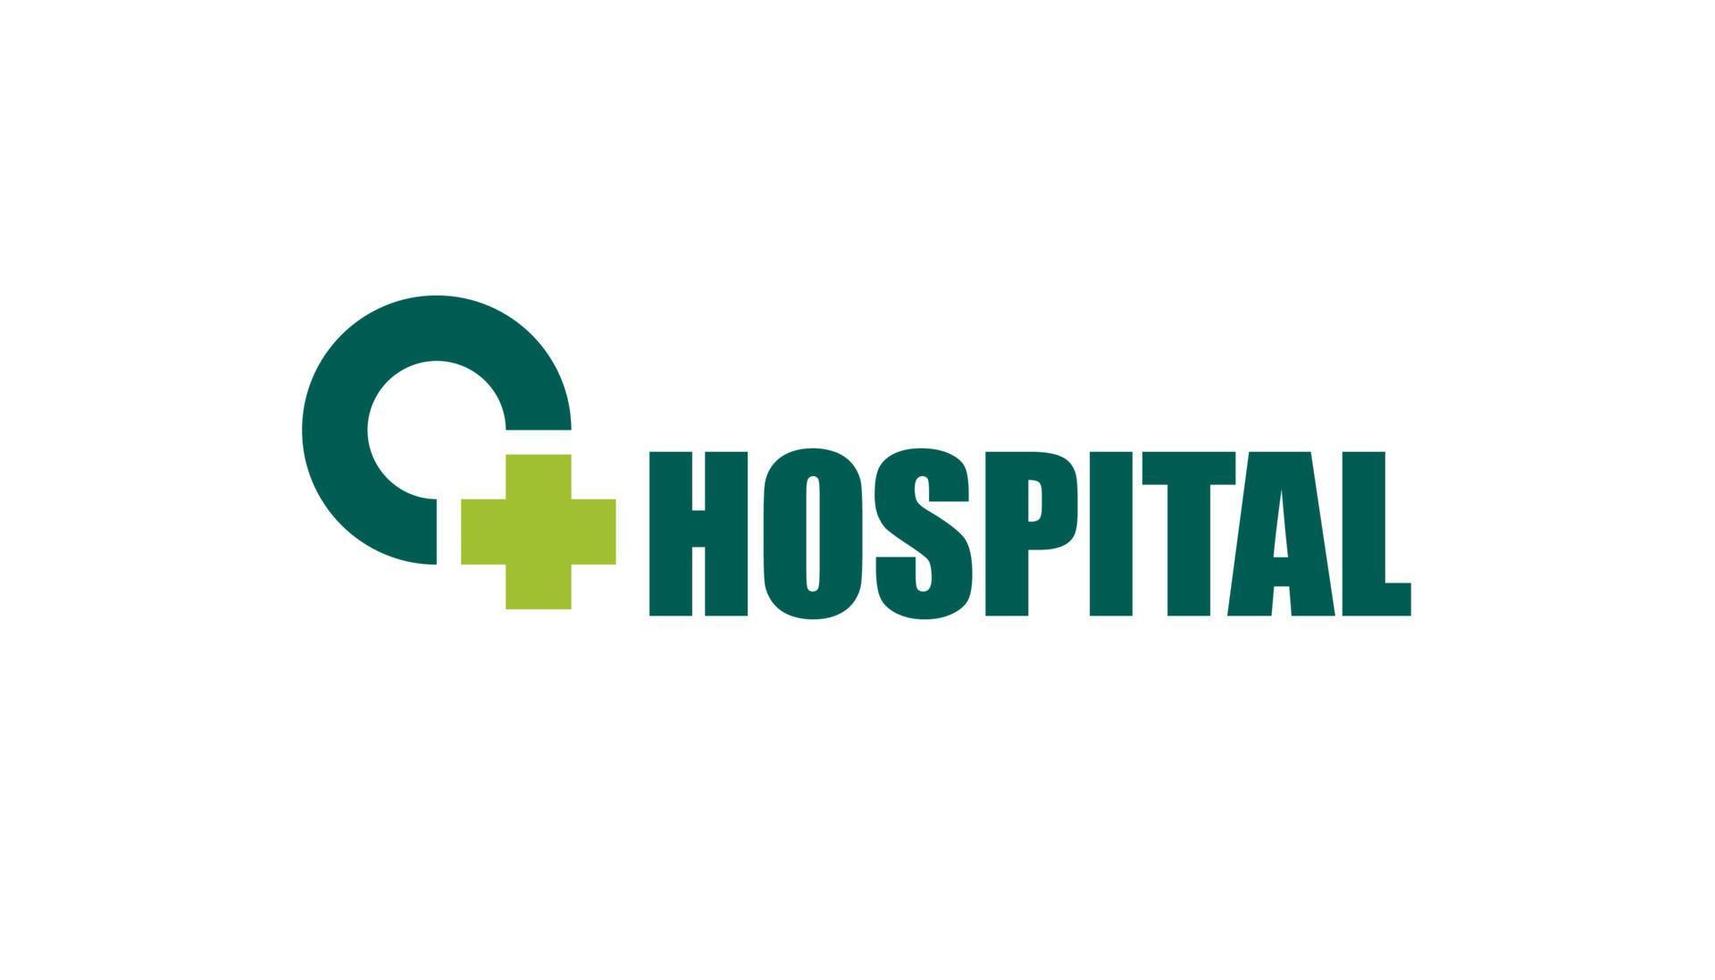 buchstabe o plus logo des krankenhauses, kliniklogo, logo des gesundheitswesens vektor